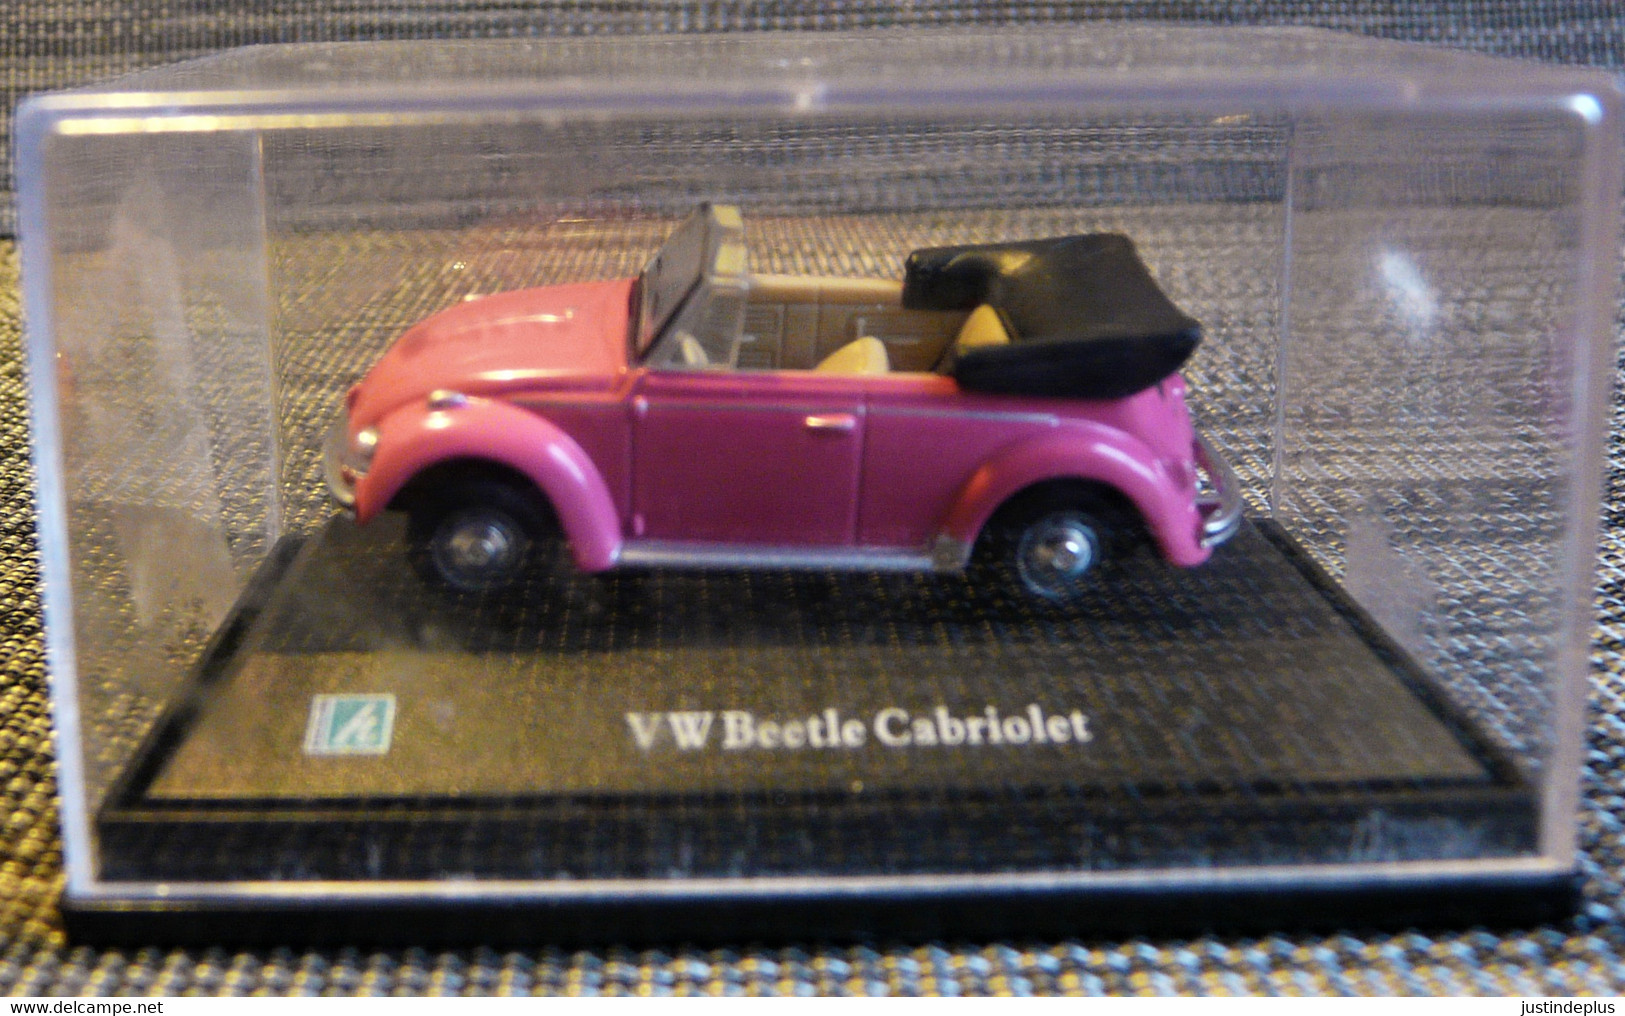 VW BEETLE CABRIOLET ROSE WOLKSVAGEN COCCINELLE ECHELLE 1/72EME - Echelle 1:72